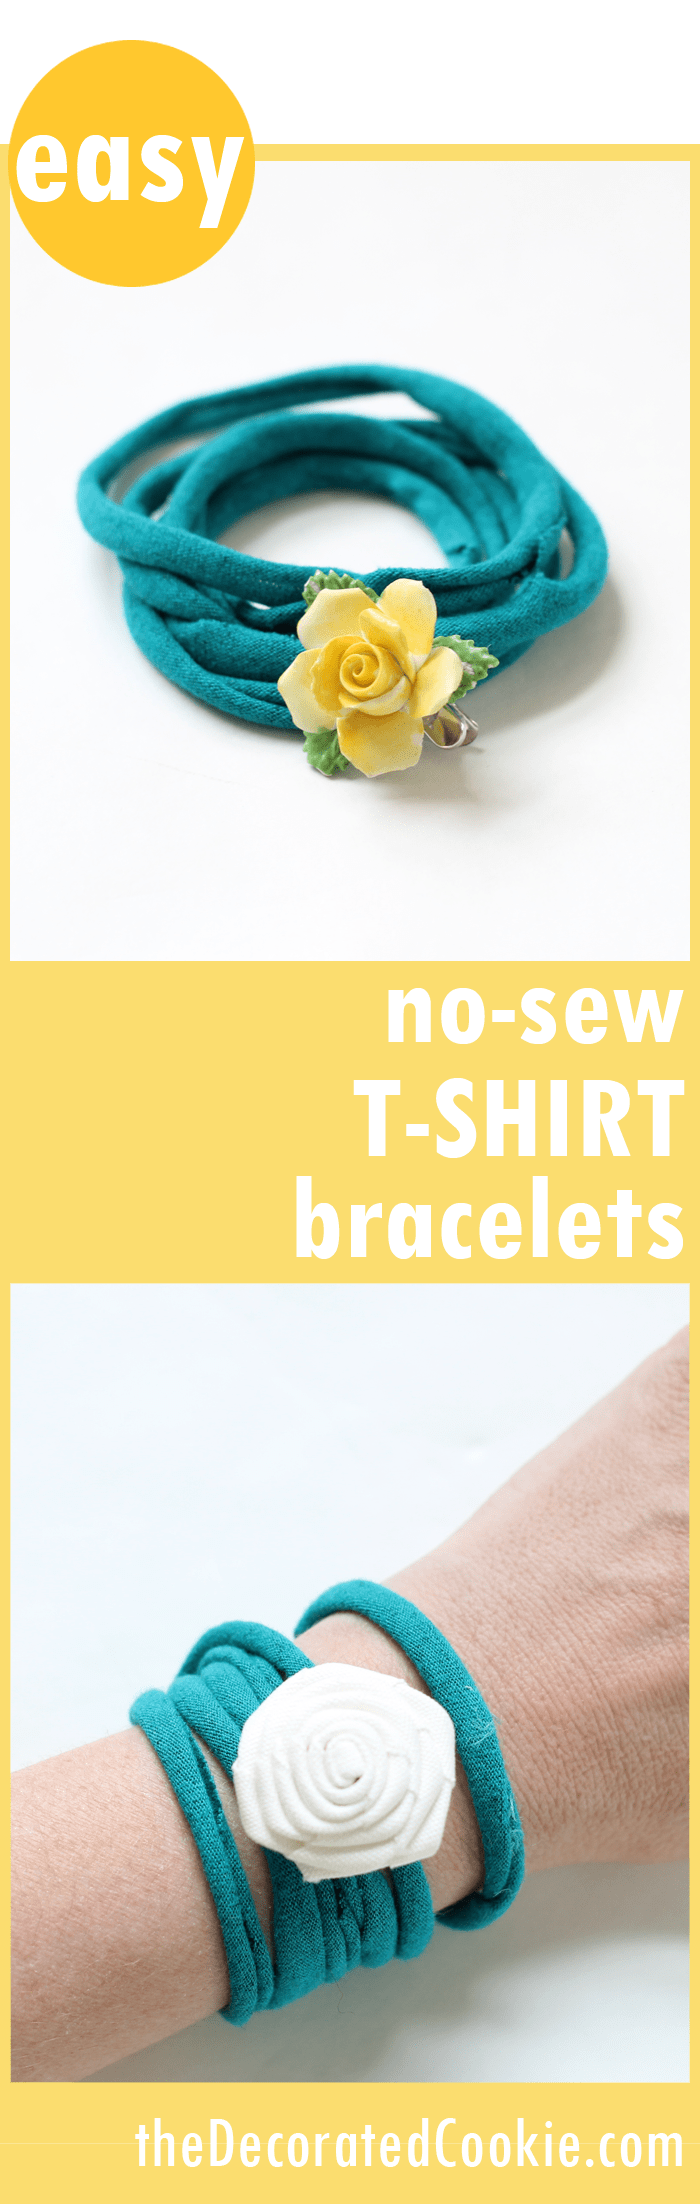 EASY no-sew T-shirt bracelet